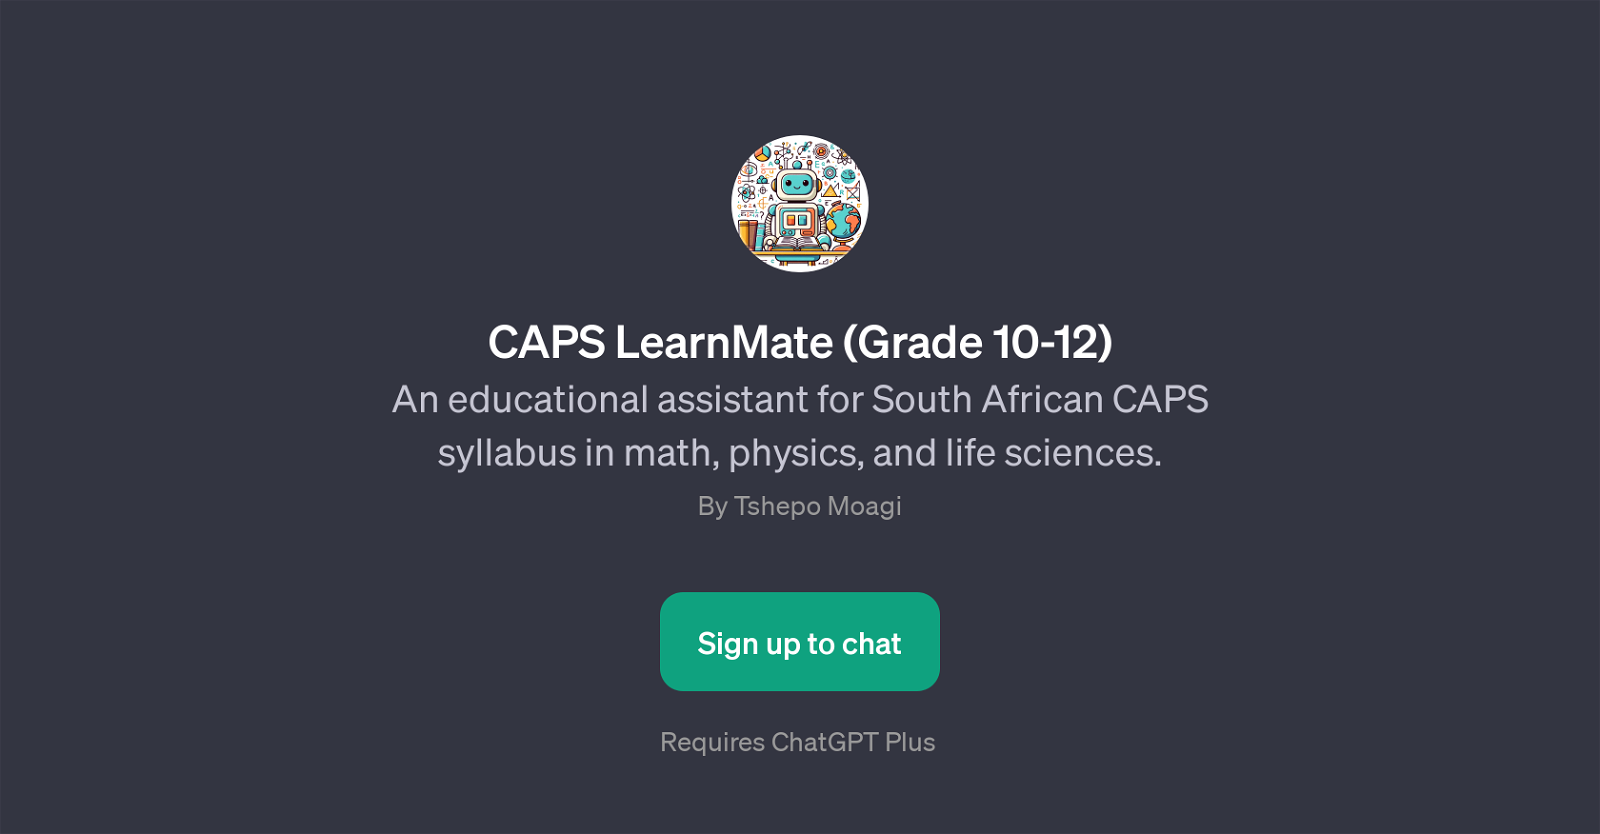 CAPS LearnMate (Grade 10-12) website